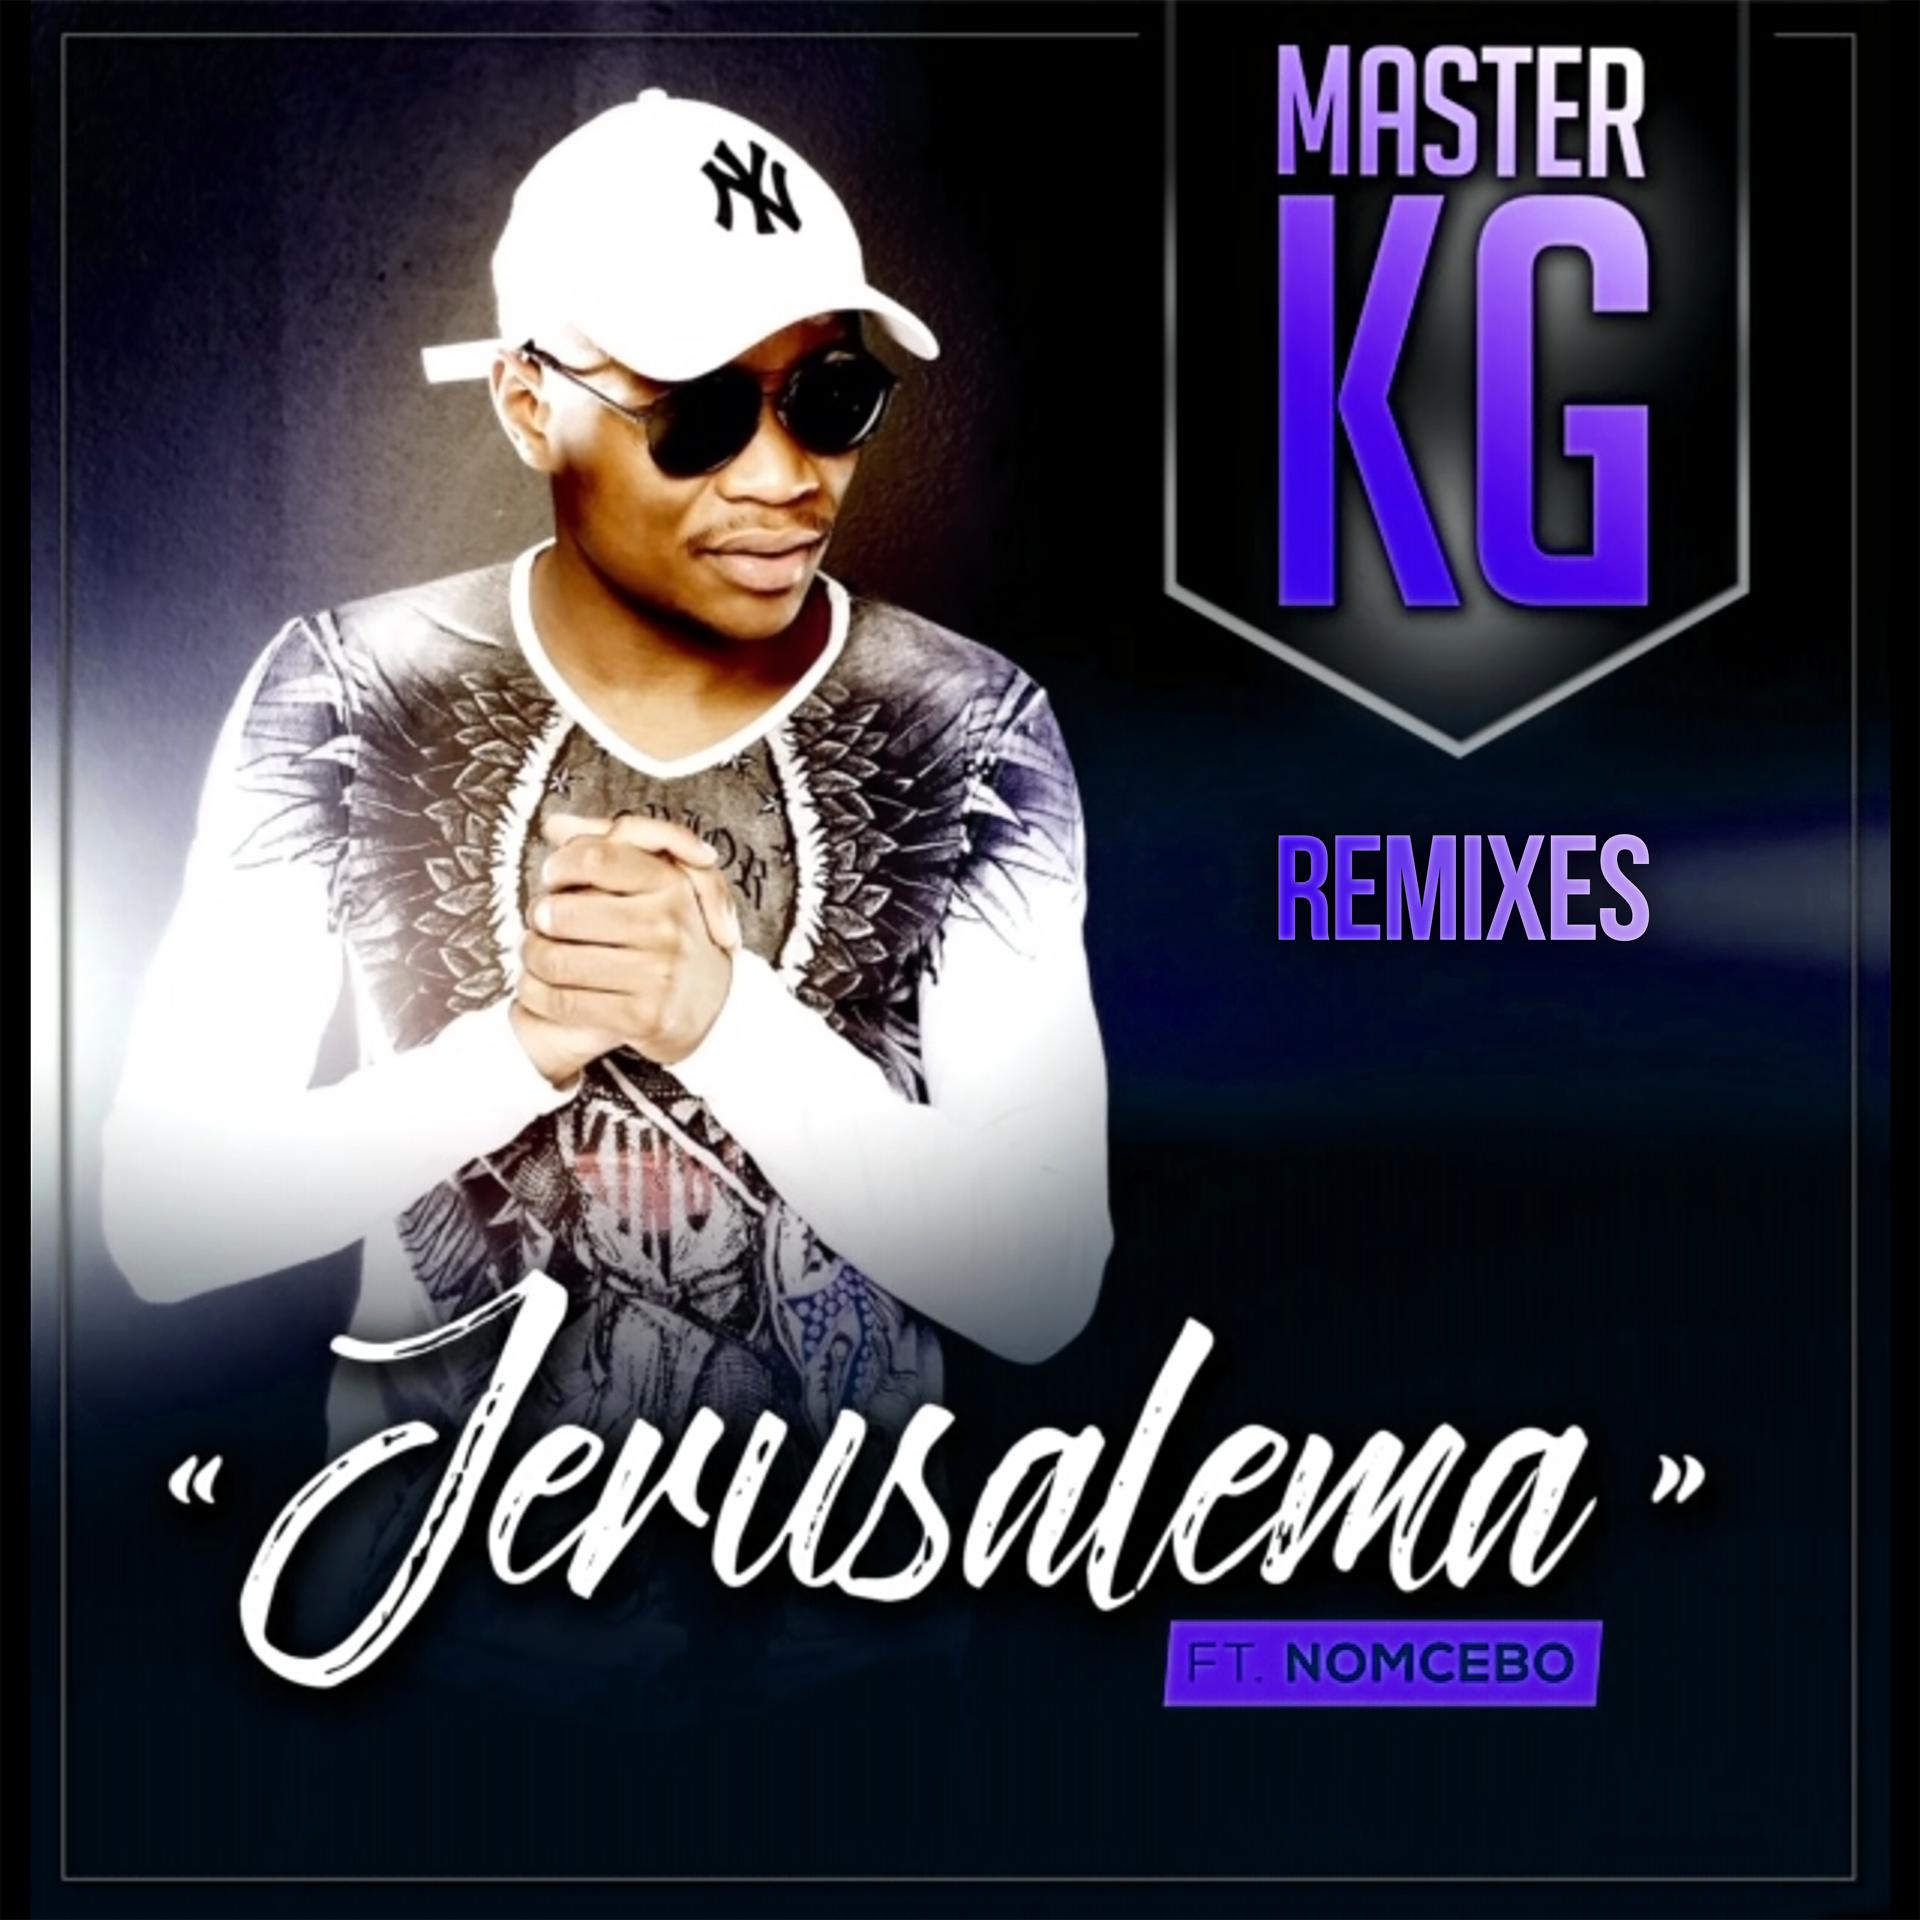 Jerusalema Master kg feat. Nomcebo Zikode. Feat nomcebo